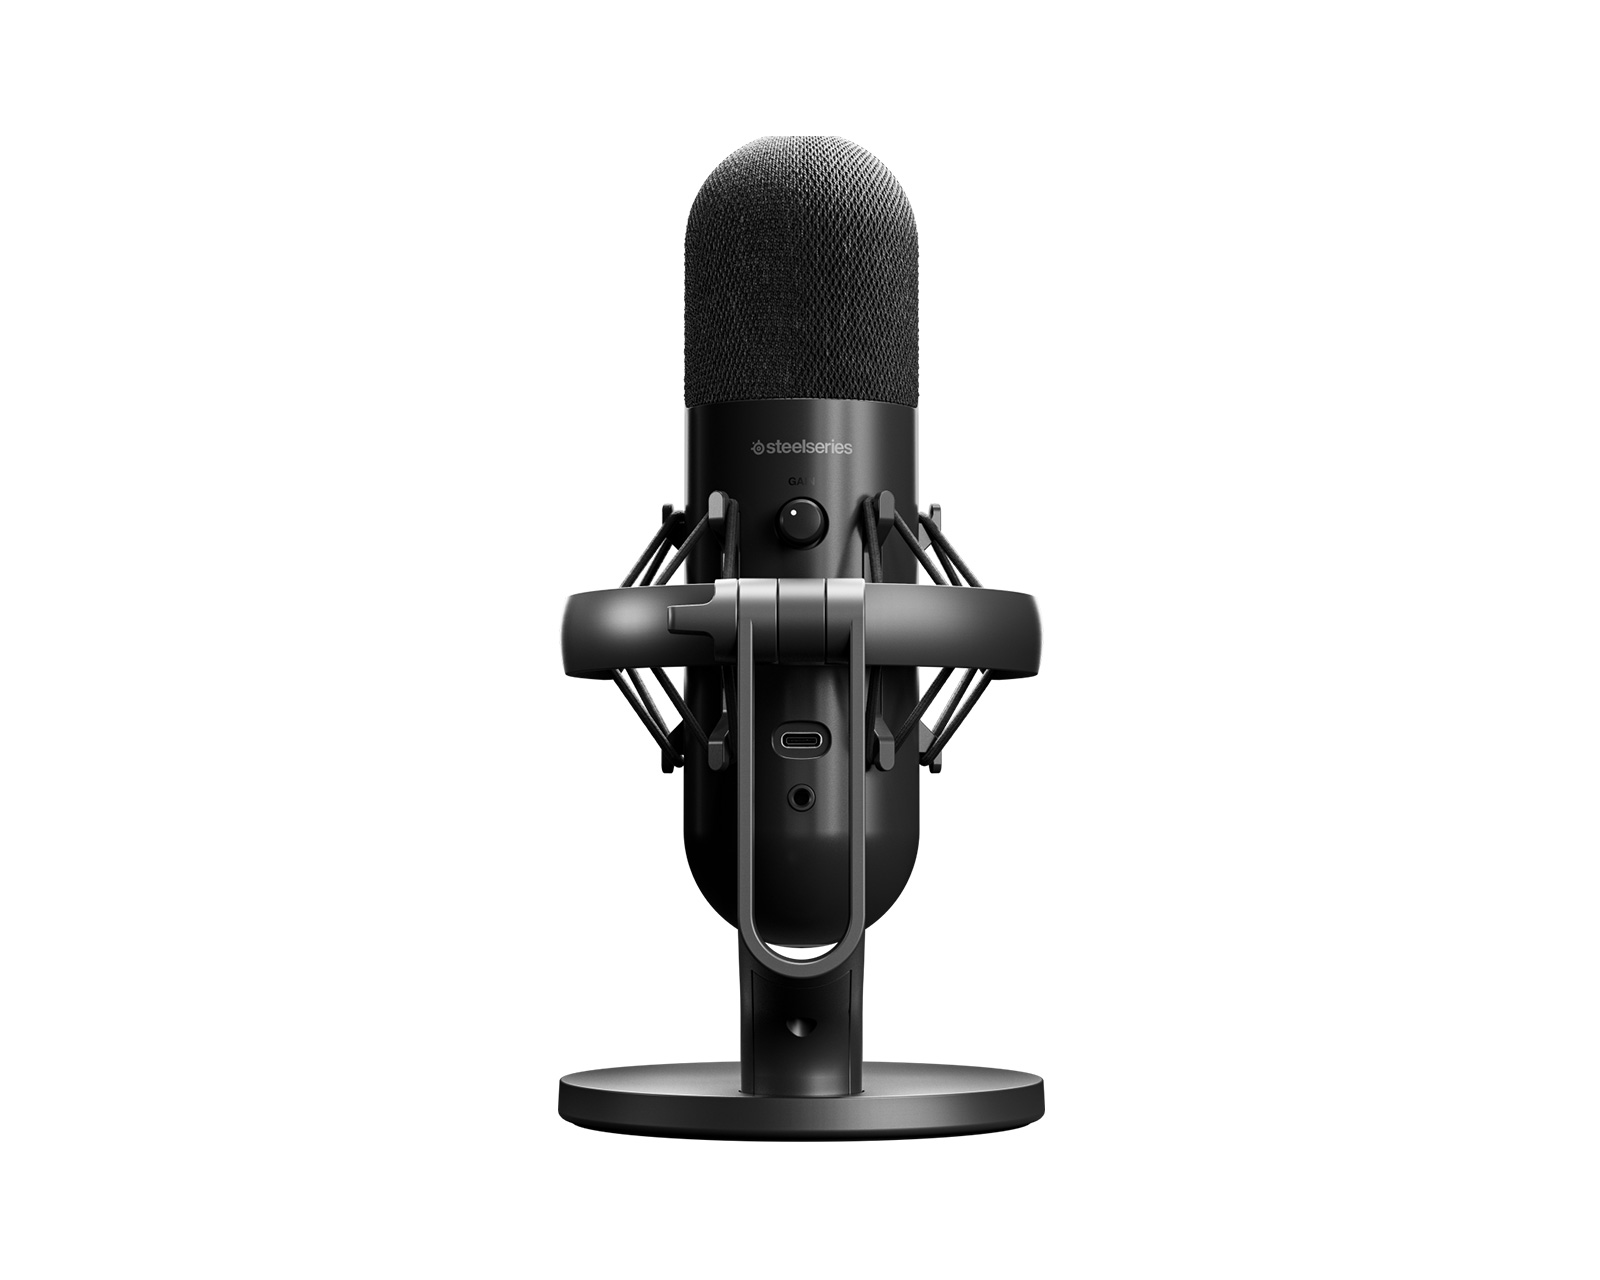 SteelSeries Alias - Black USB Microphone